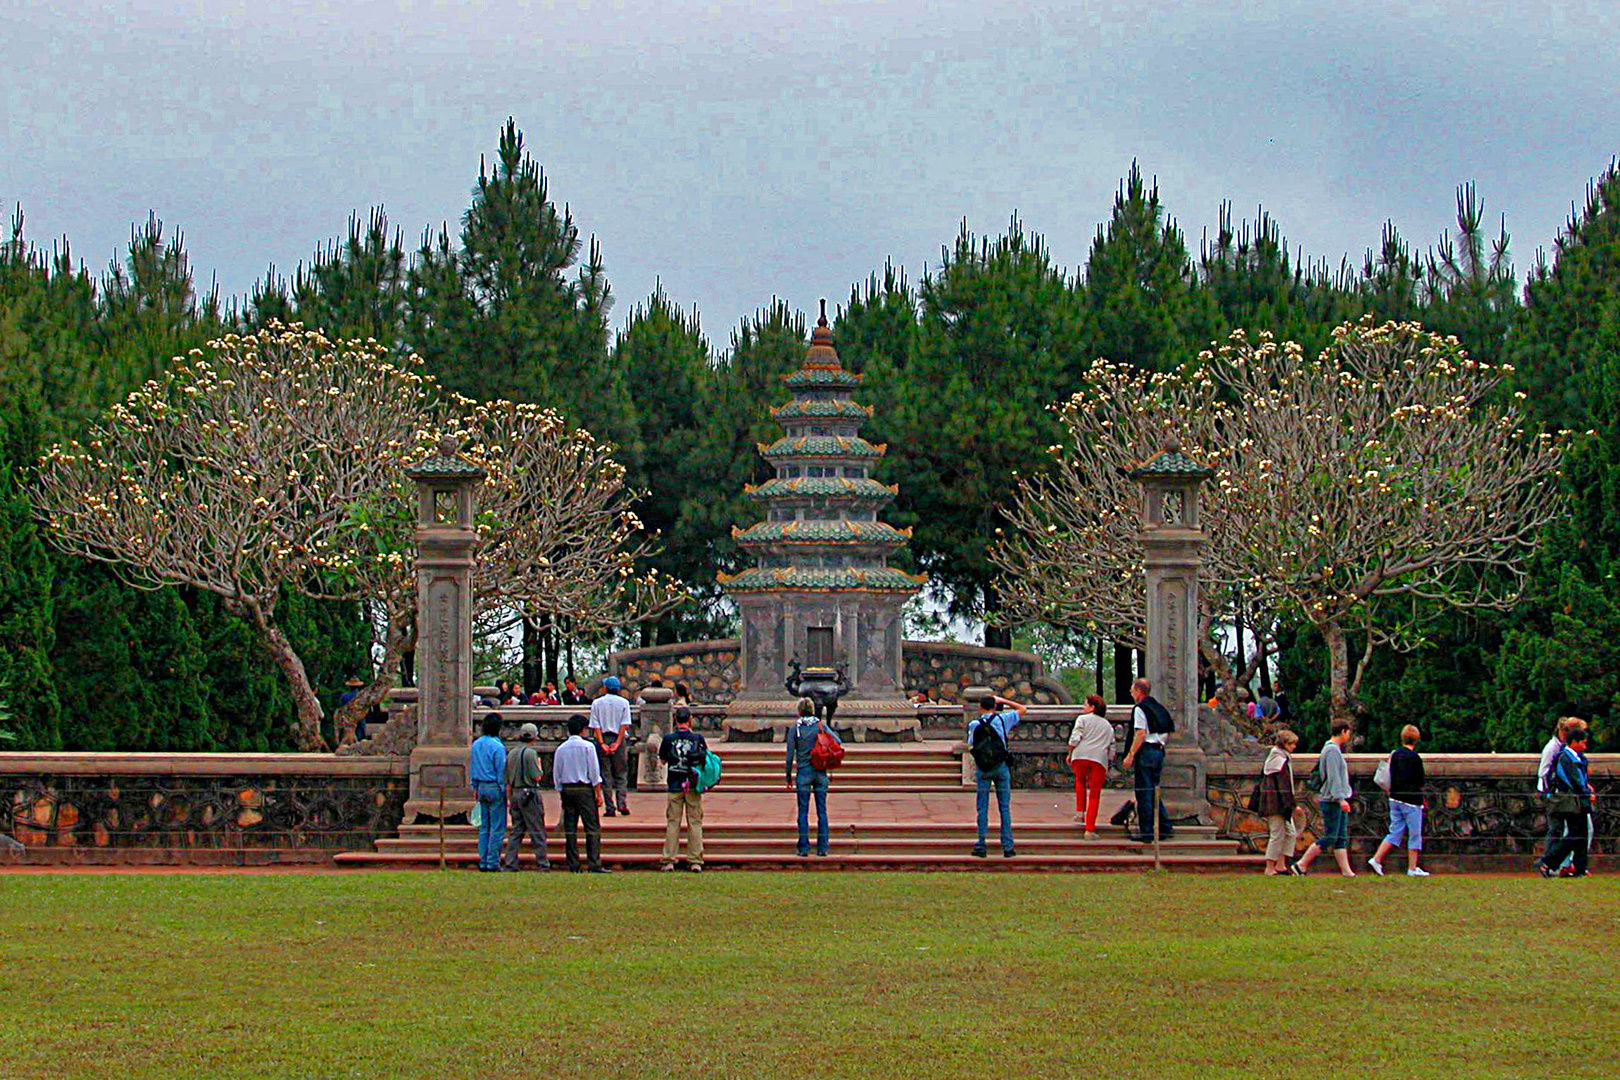 Inside the garden at Thien Mu Pagoda